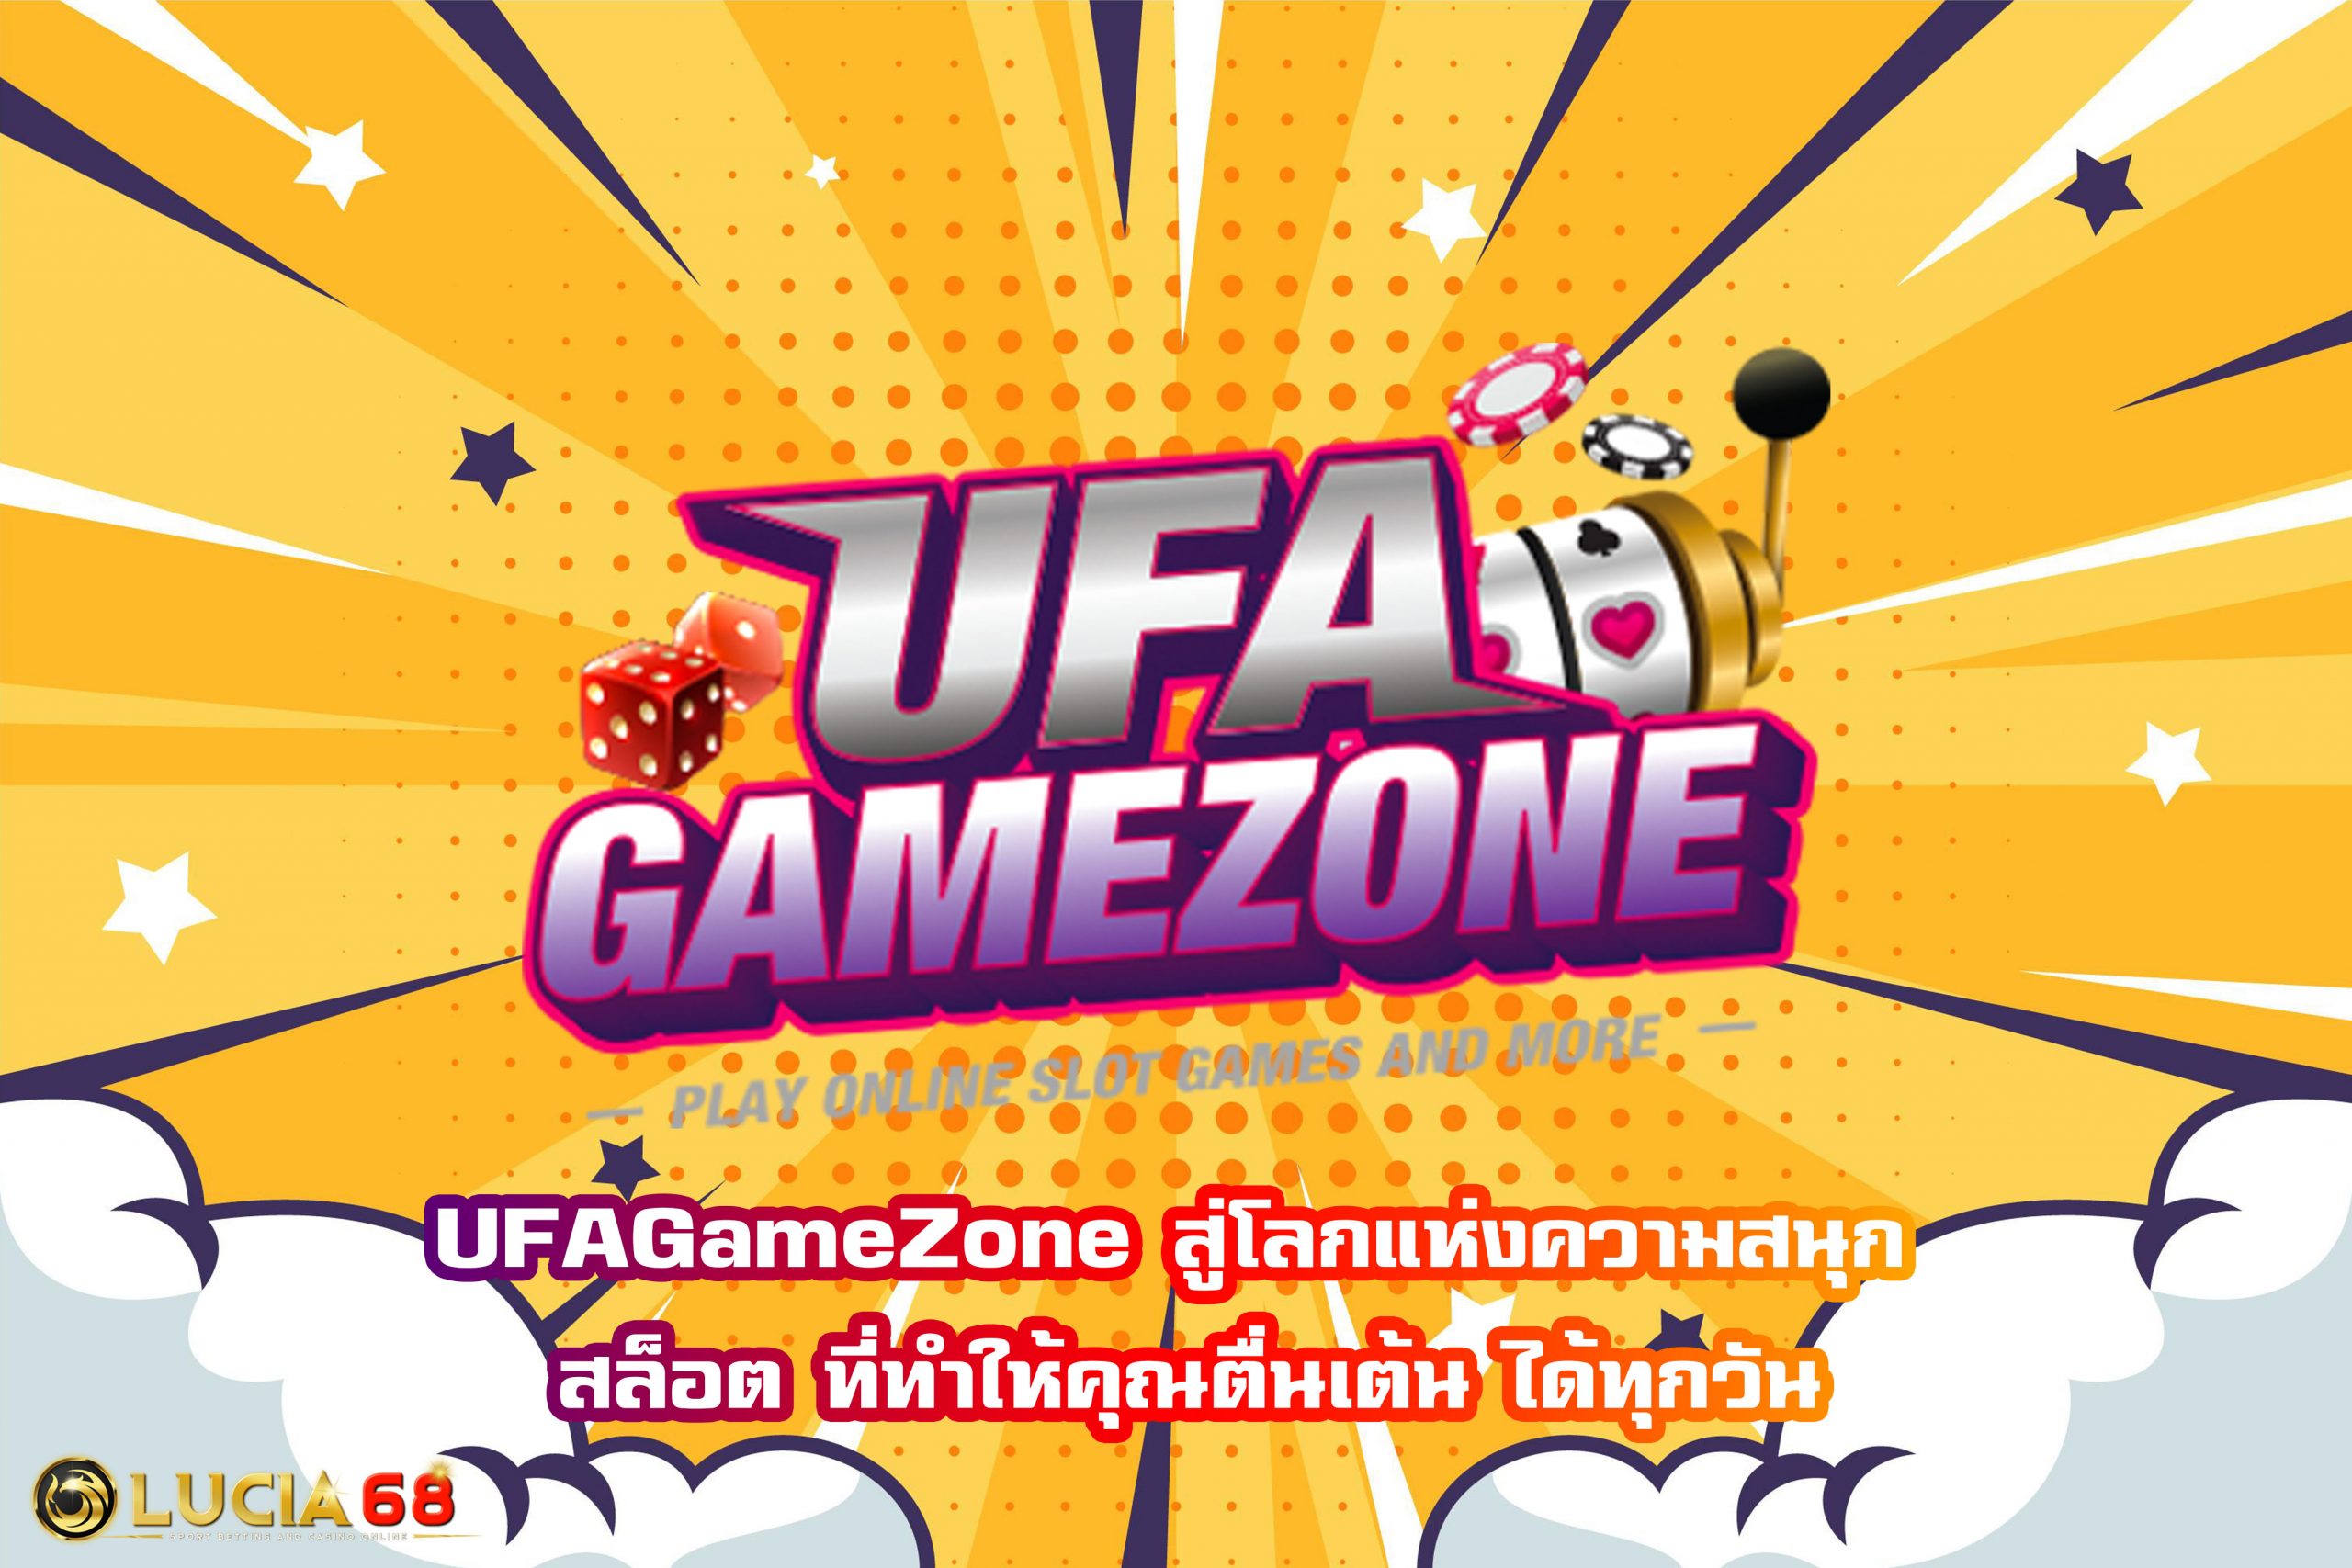 UFAGameZone สู่โลกแห่งความสนุก สล็อต ที่ทำให้คุณตื่นเต้น ได้ทุกวัน